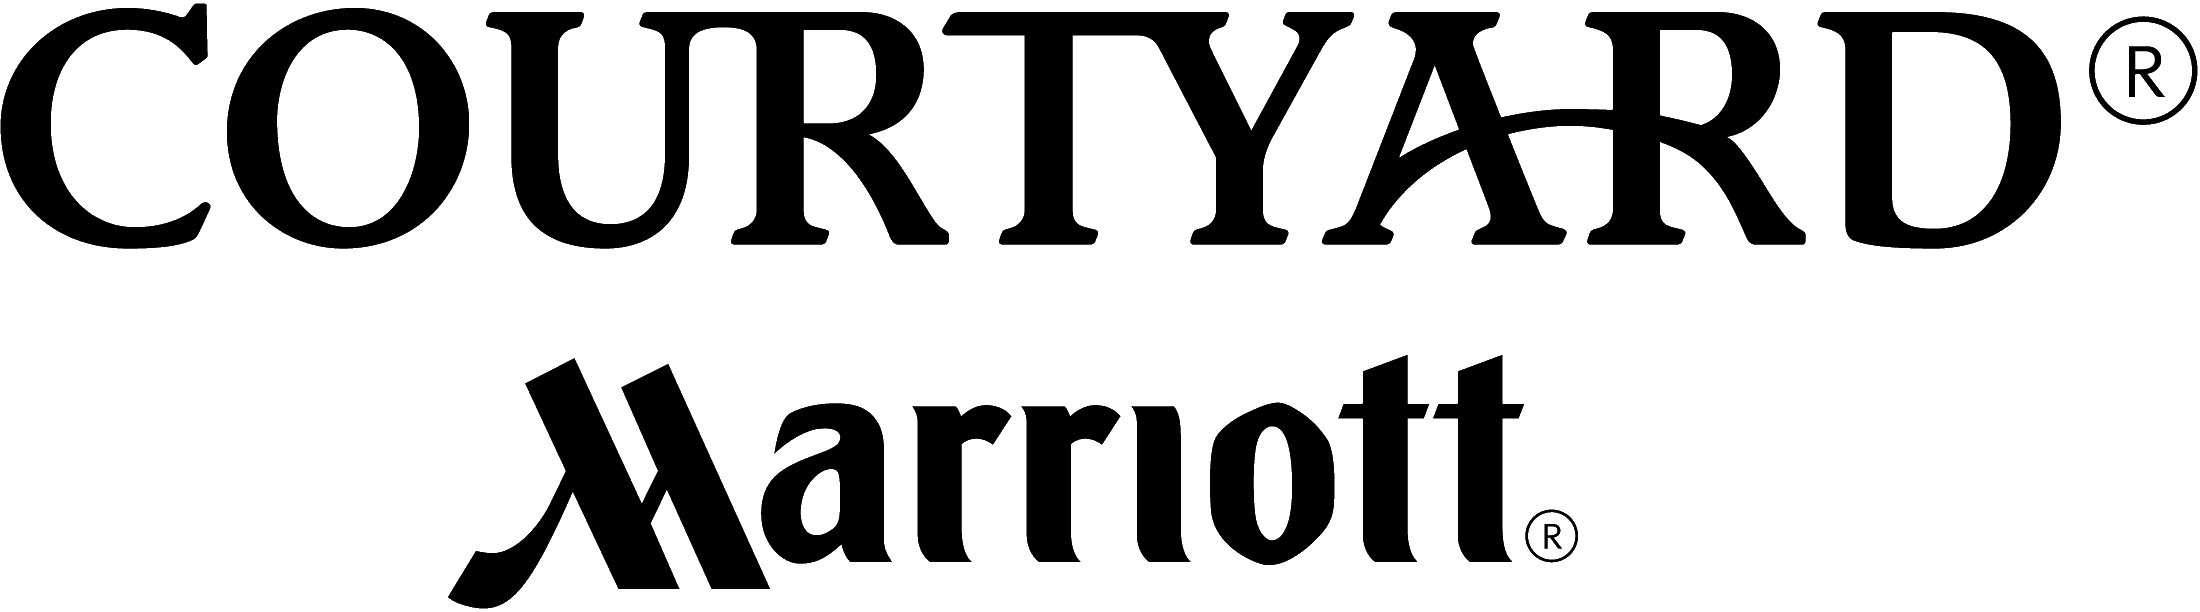 Courtyard Marriott Logo